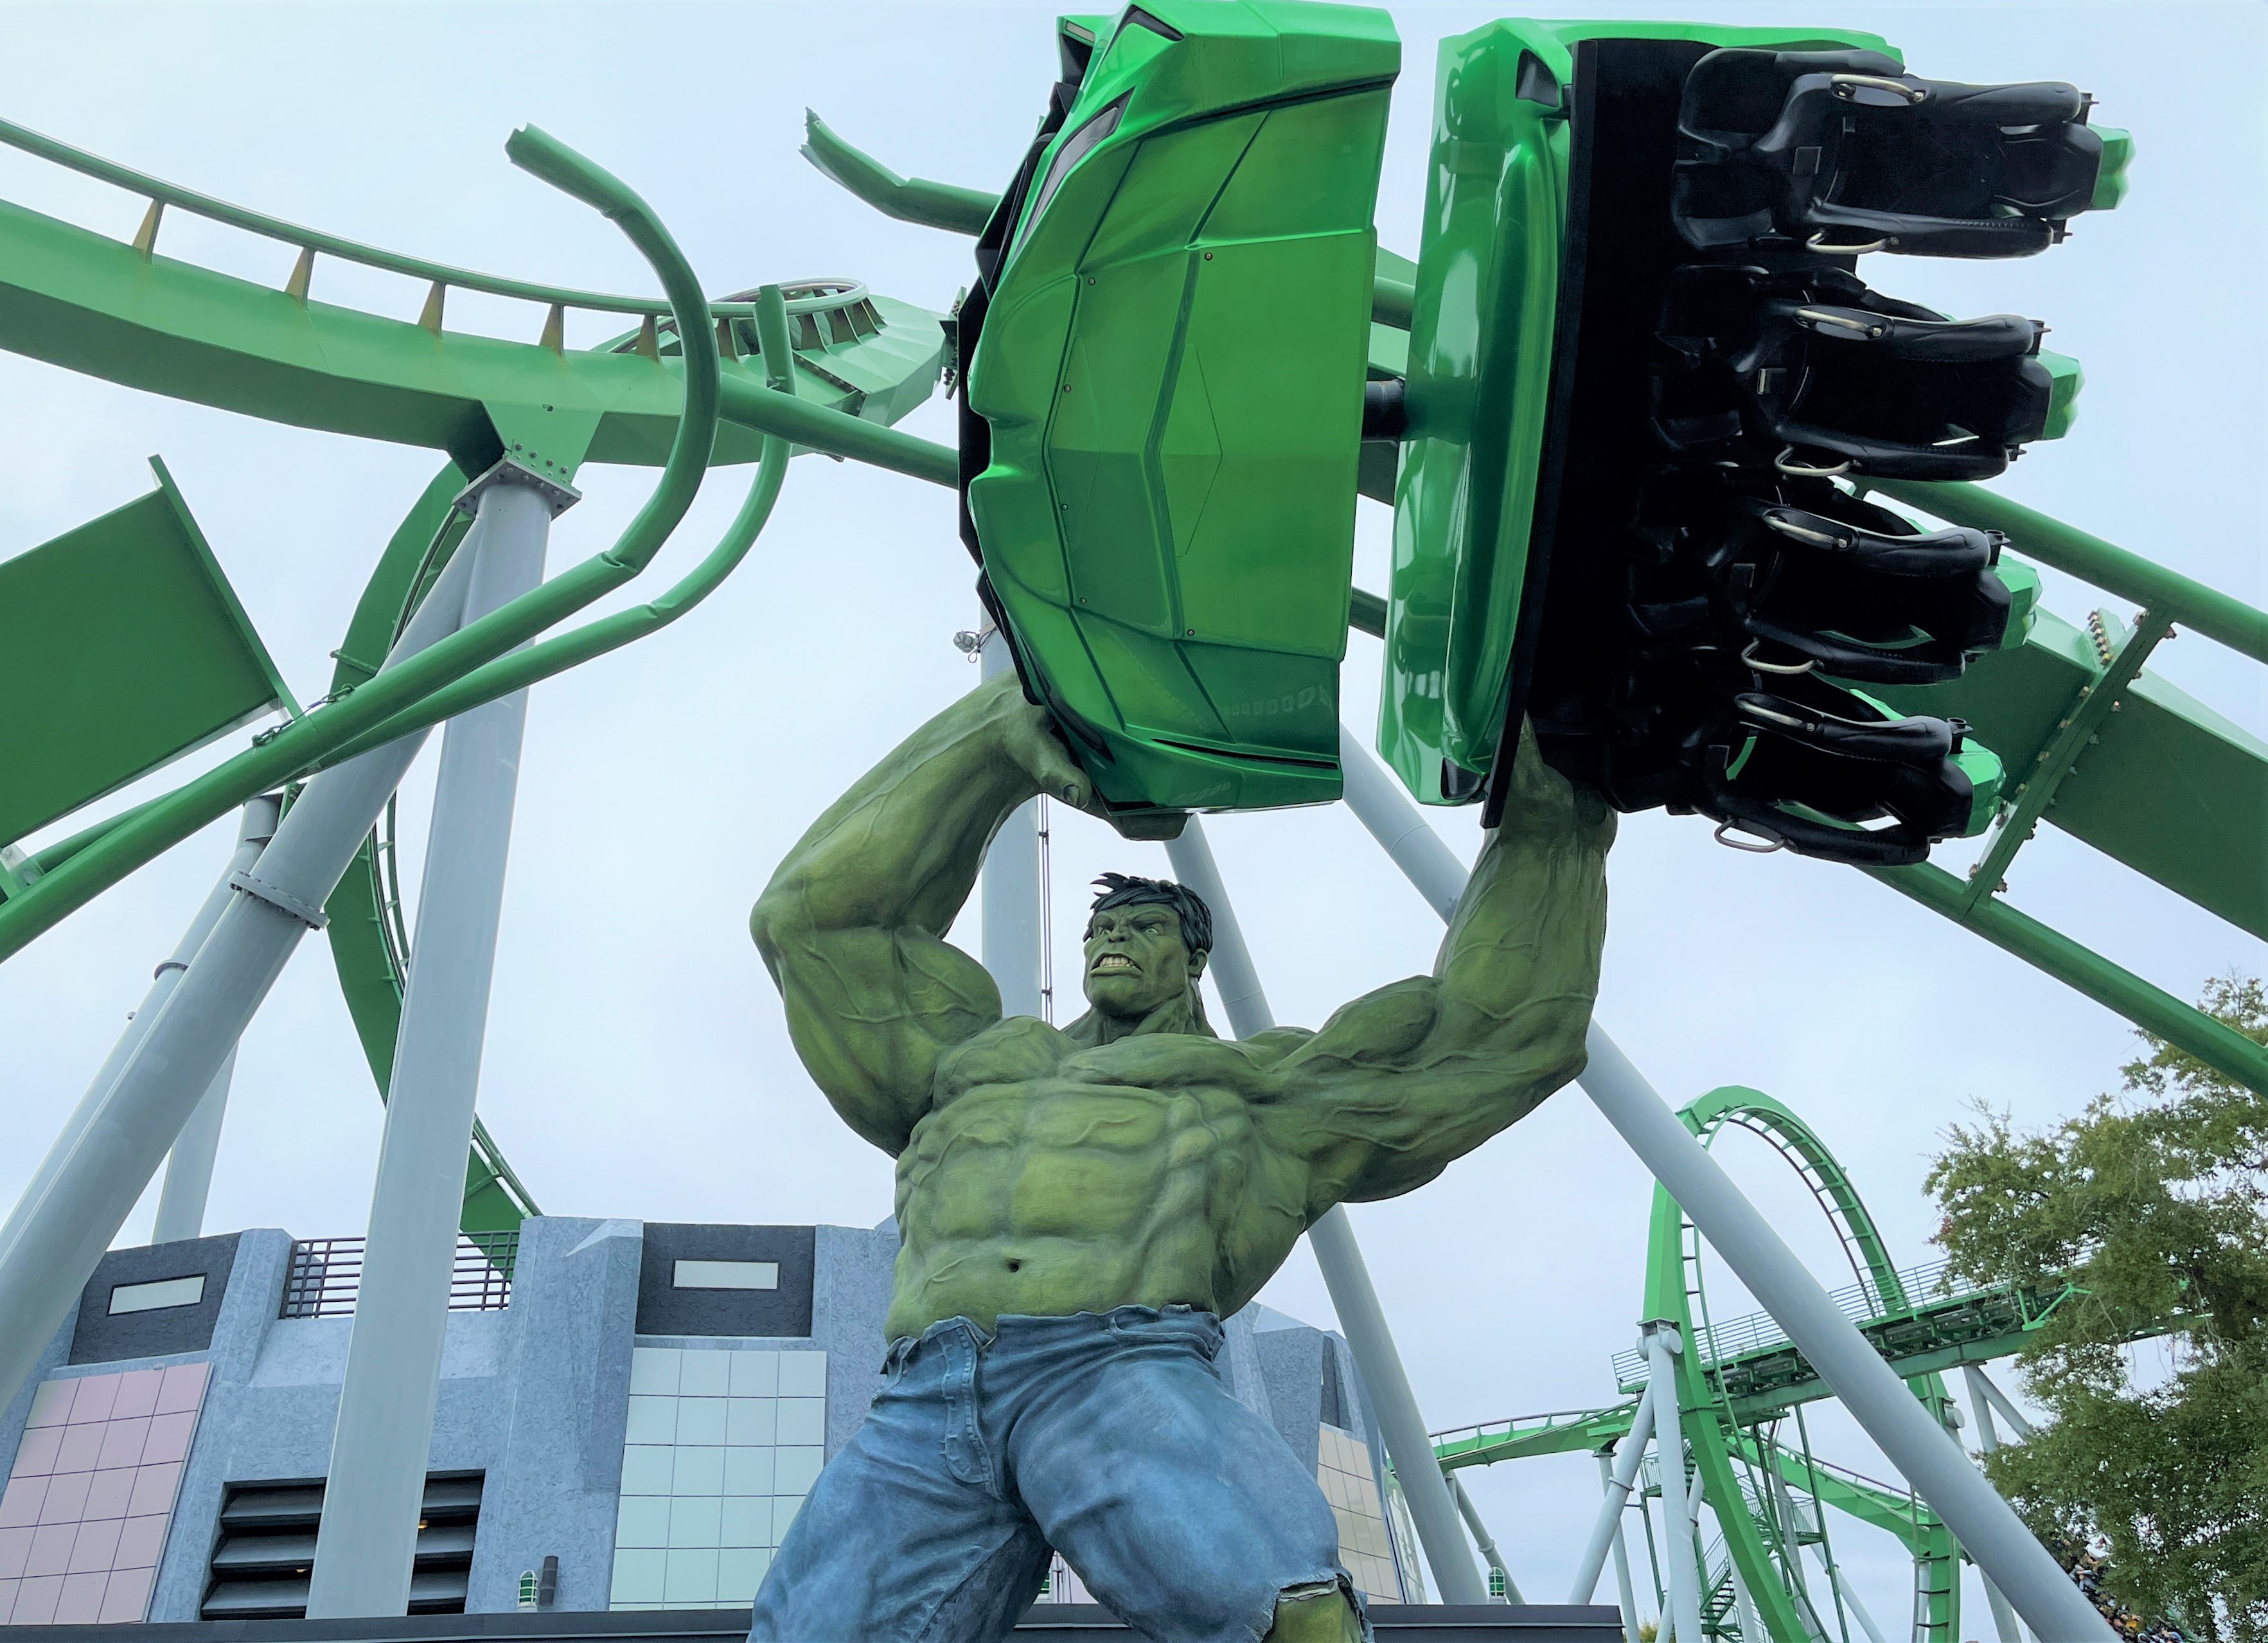 Hulk destroys a car from The Incredible Hulk Coaster at Universal Orlando